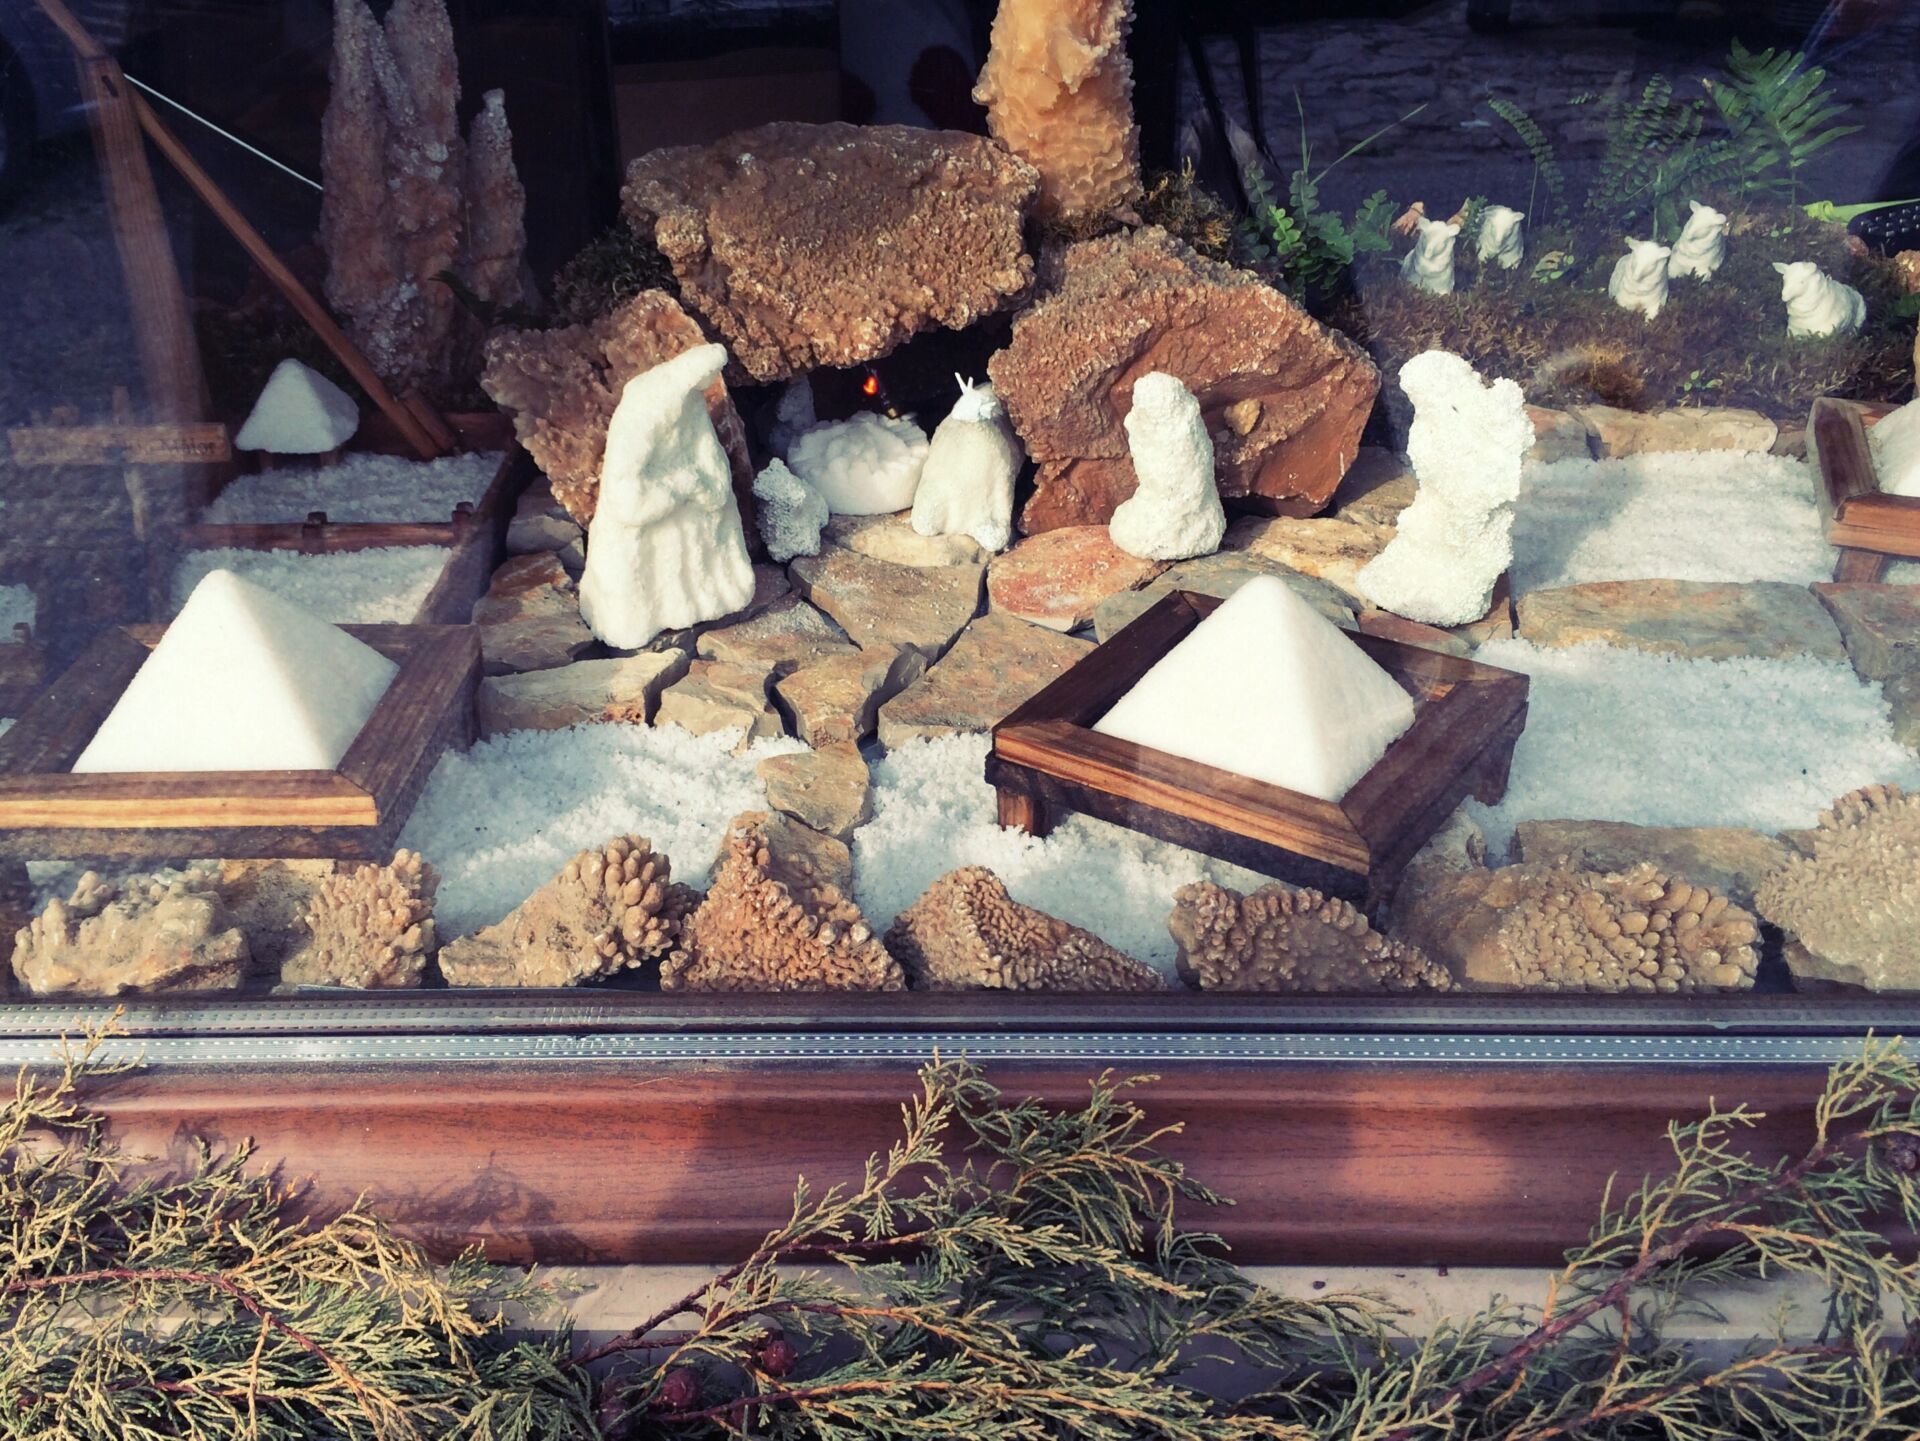 Nativity scene made of salt, featuring salt pyramids